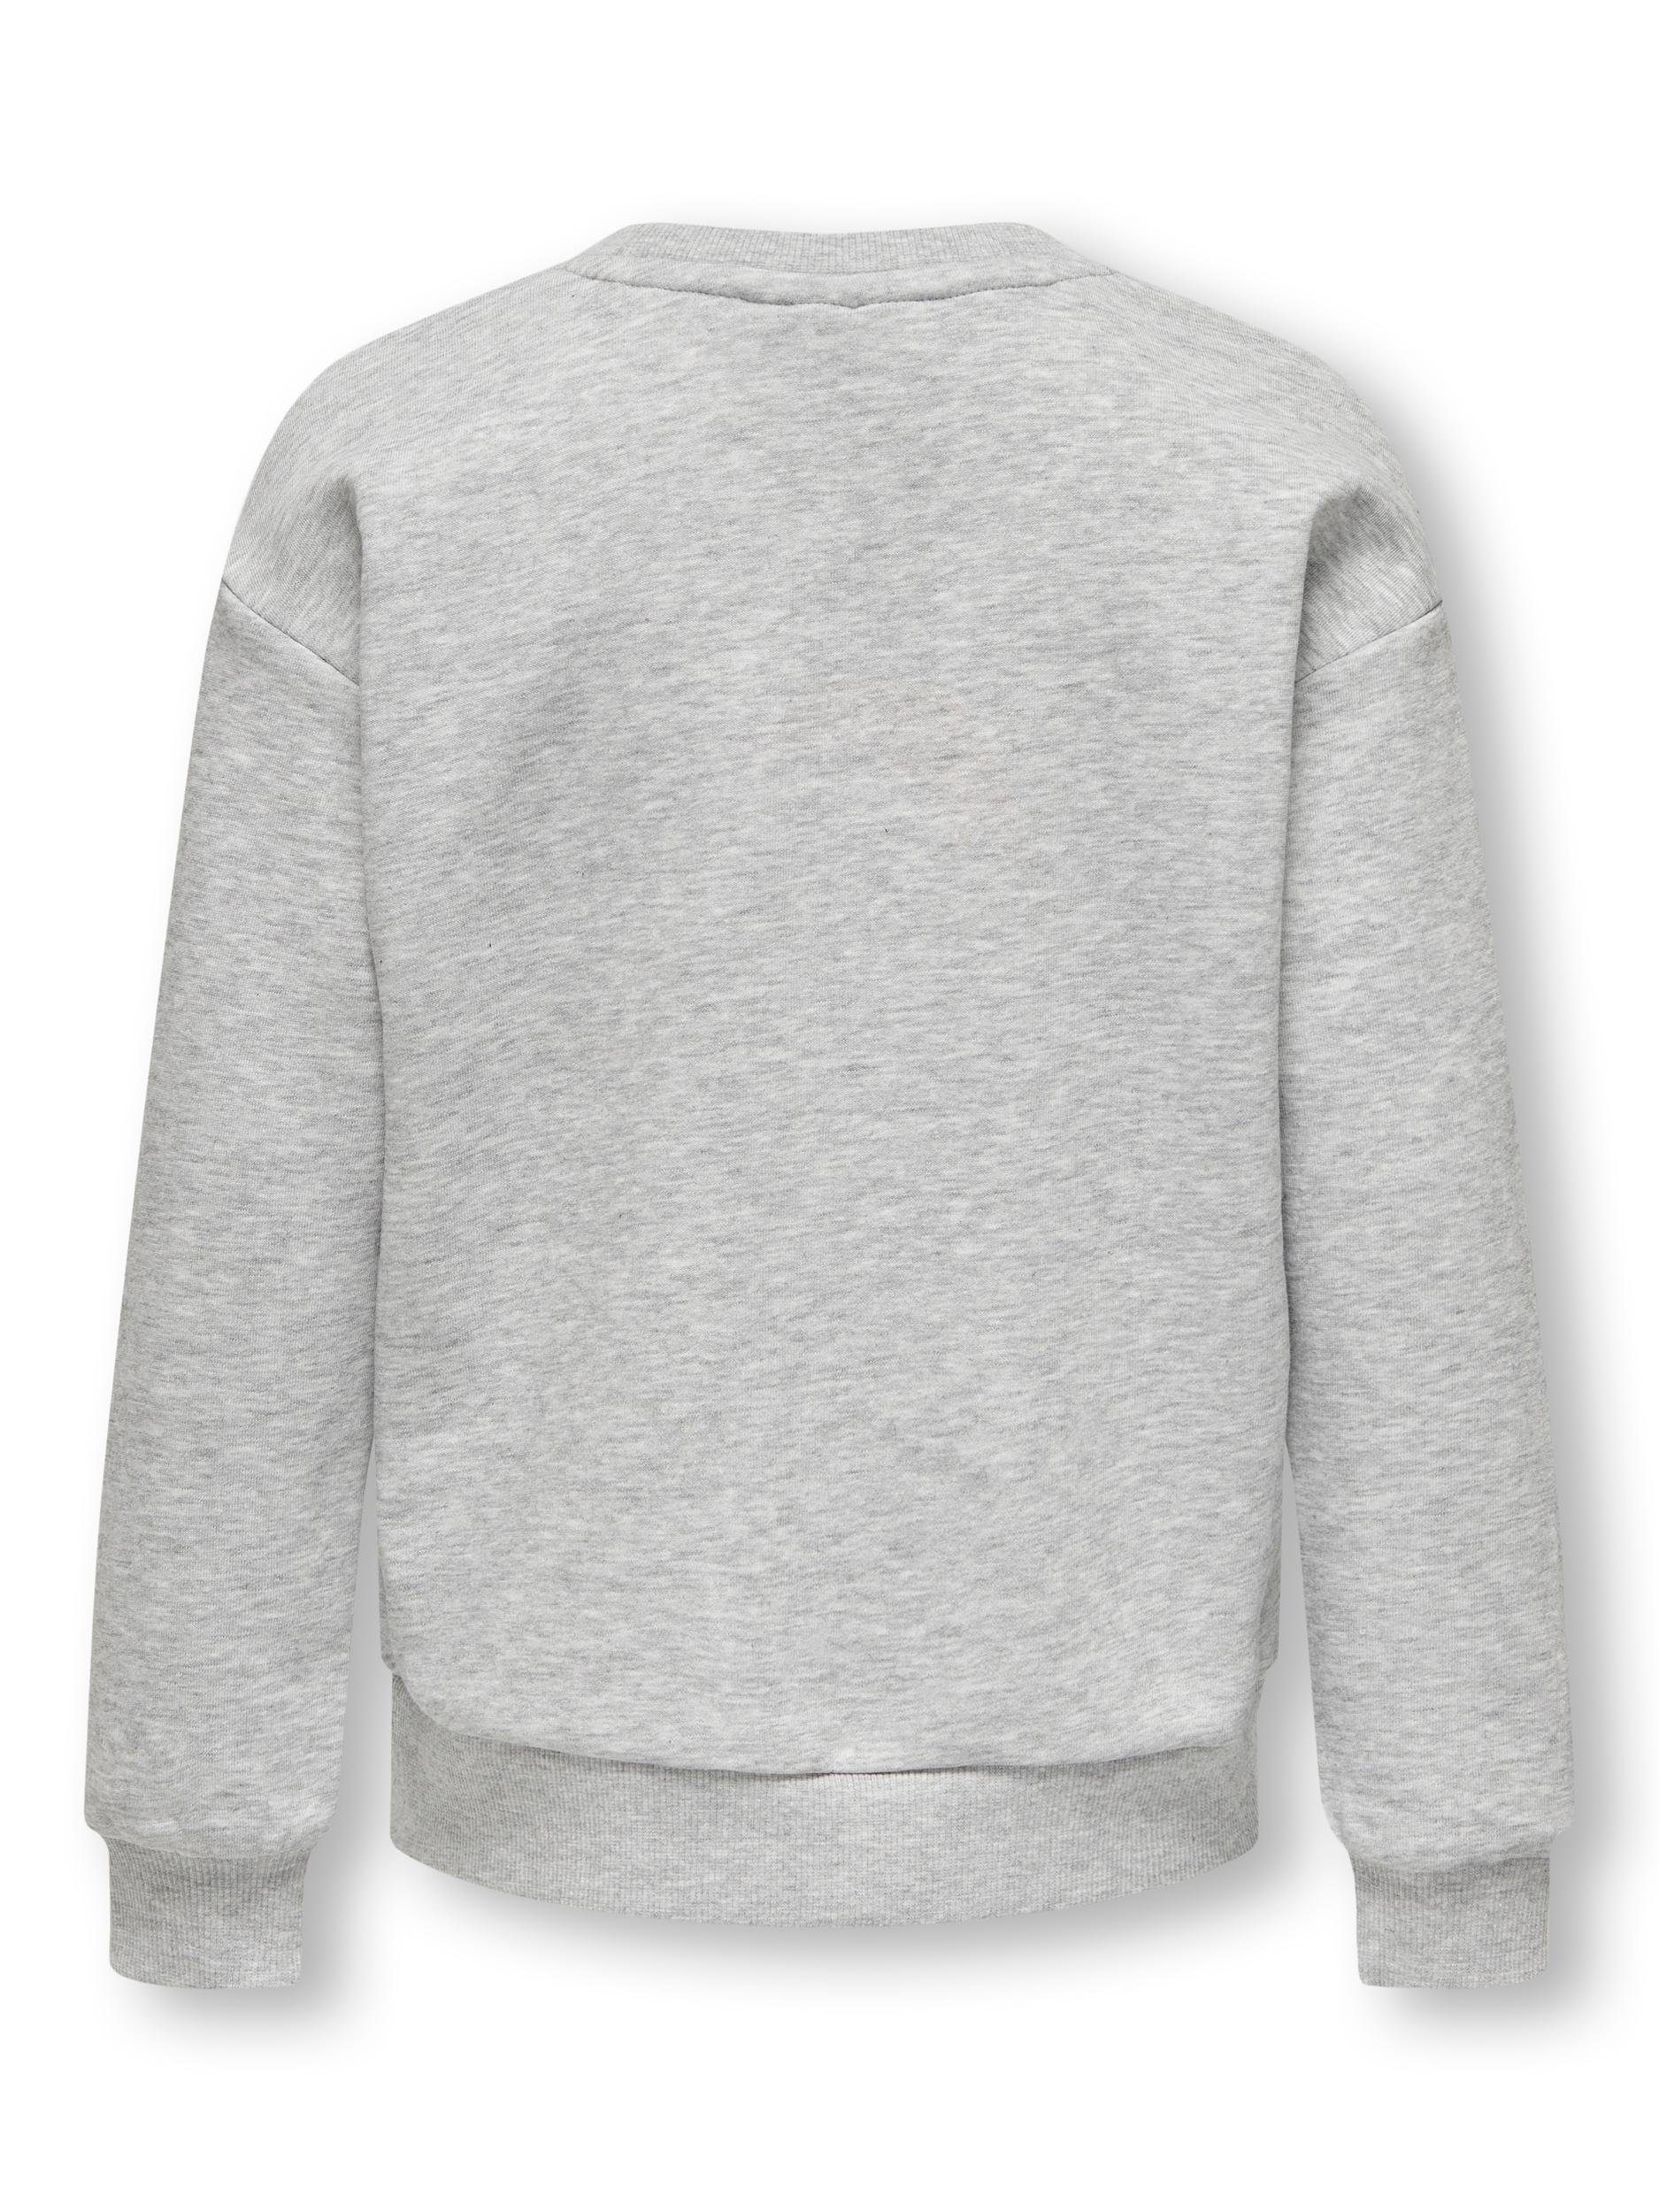 KIDS ONLY Sweatshirt melange KOGYDA light grey